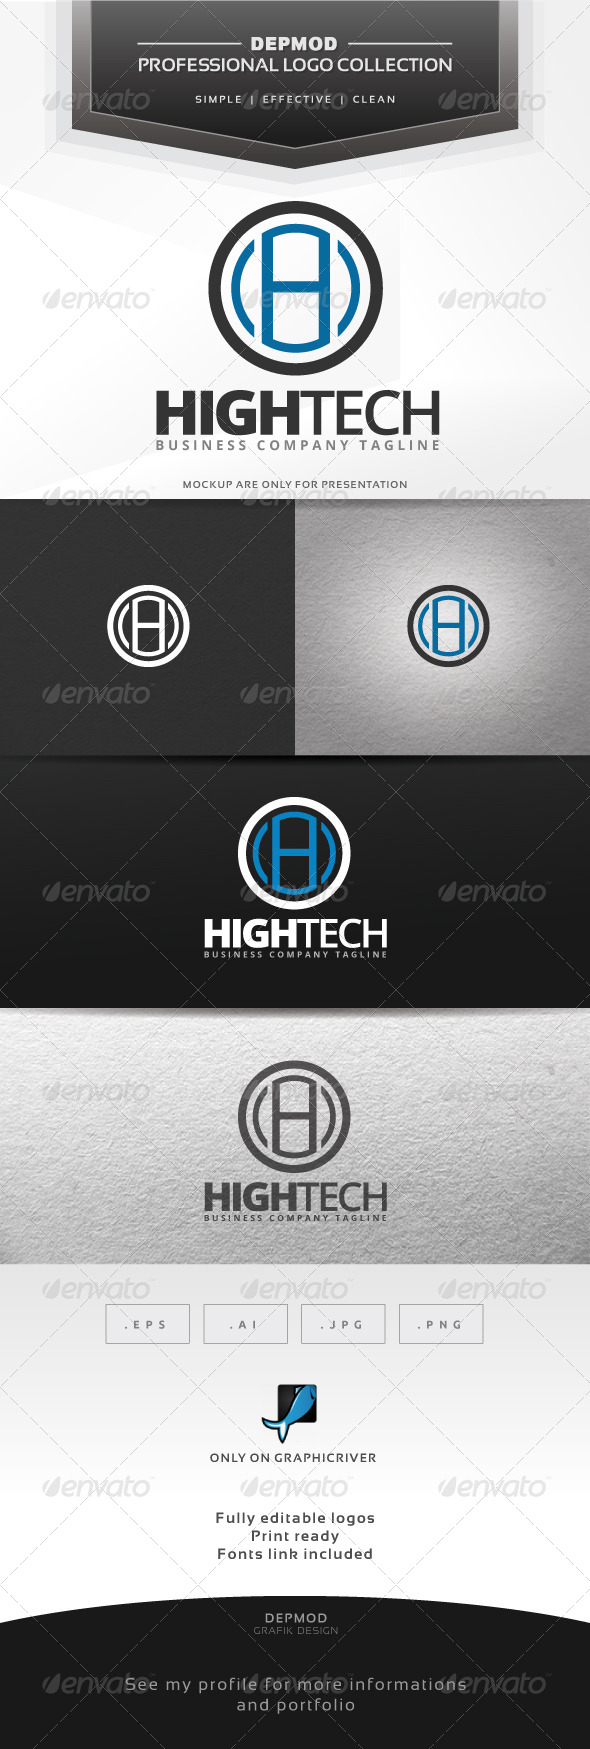 High Tech Logo